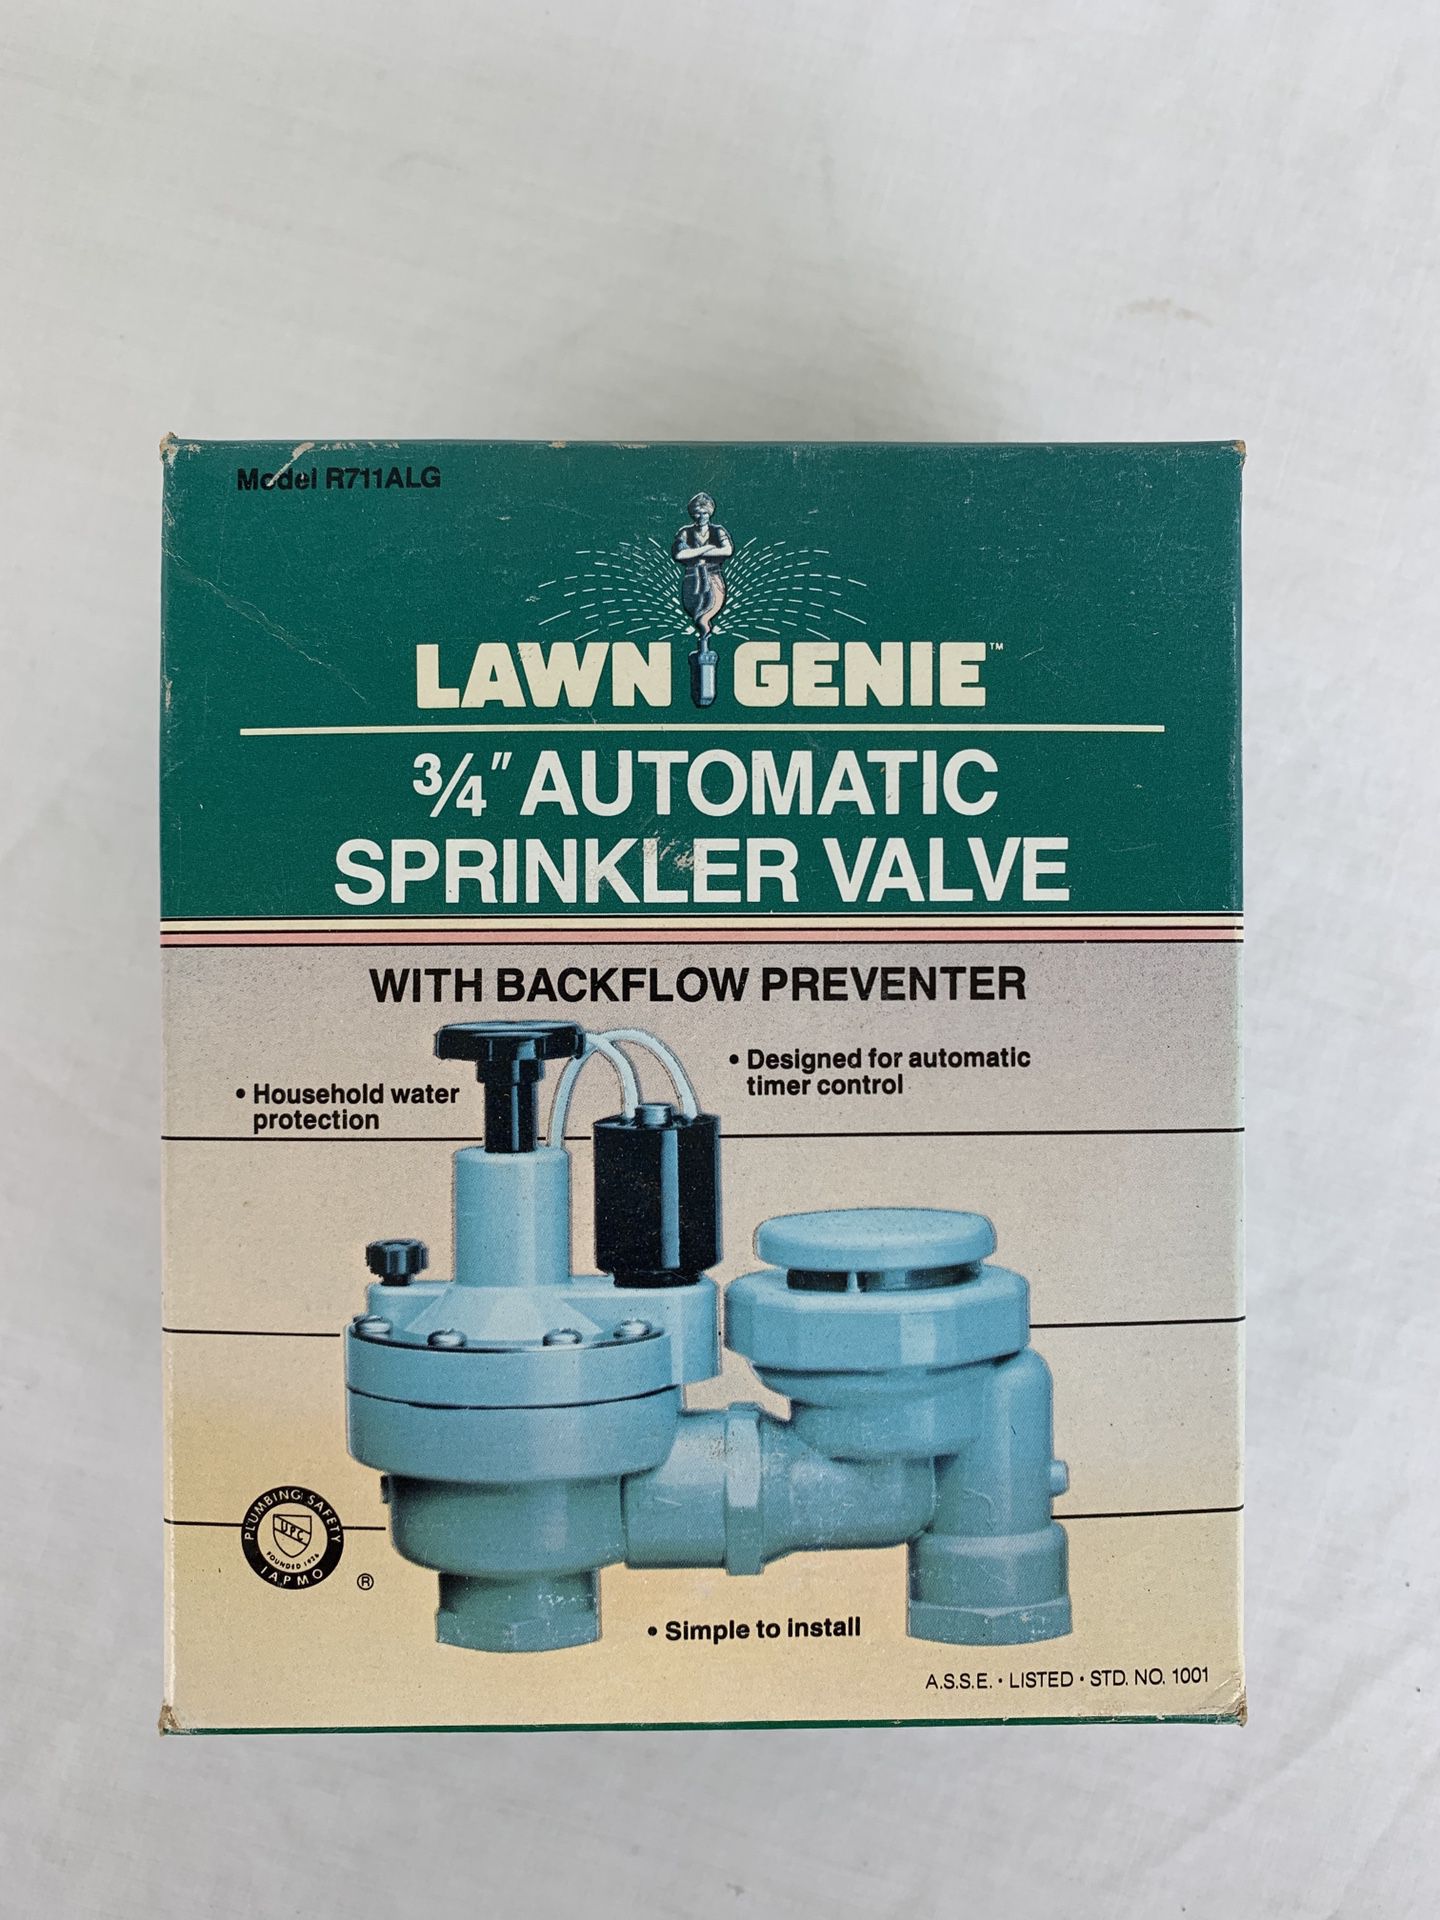 Lawn Genie 3/4” lawn sprinkler valve, model R711ALG, new never used